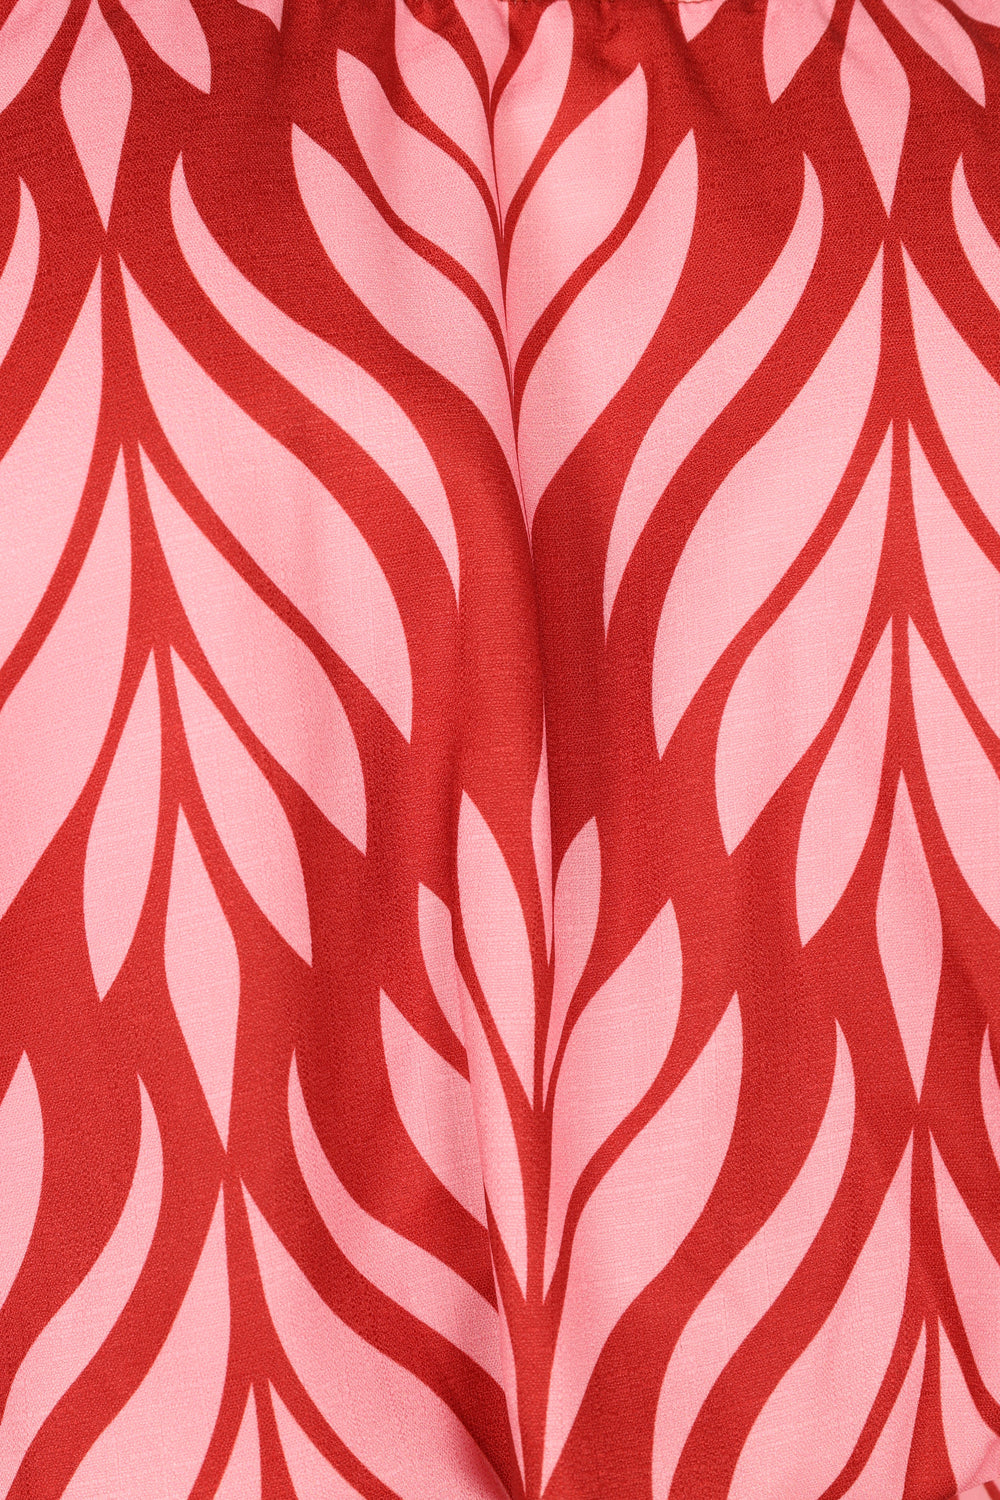 DRESSES @Neoma Strapless Midi Dress - Red Palm Print